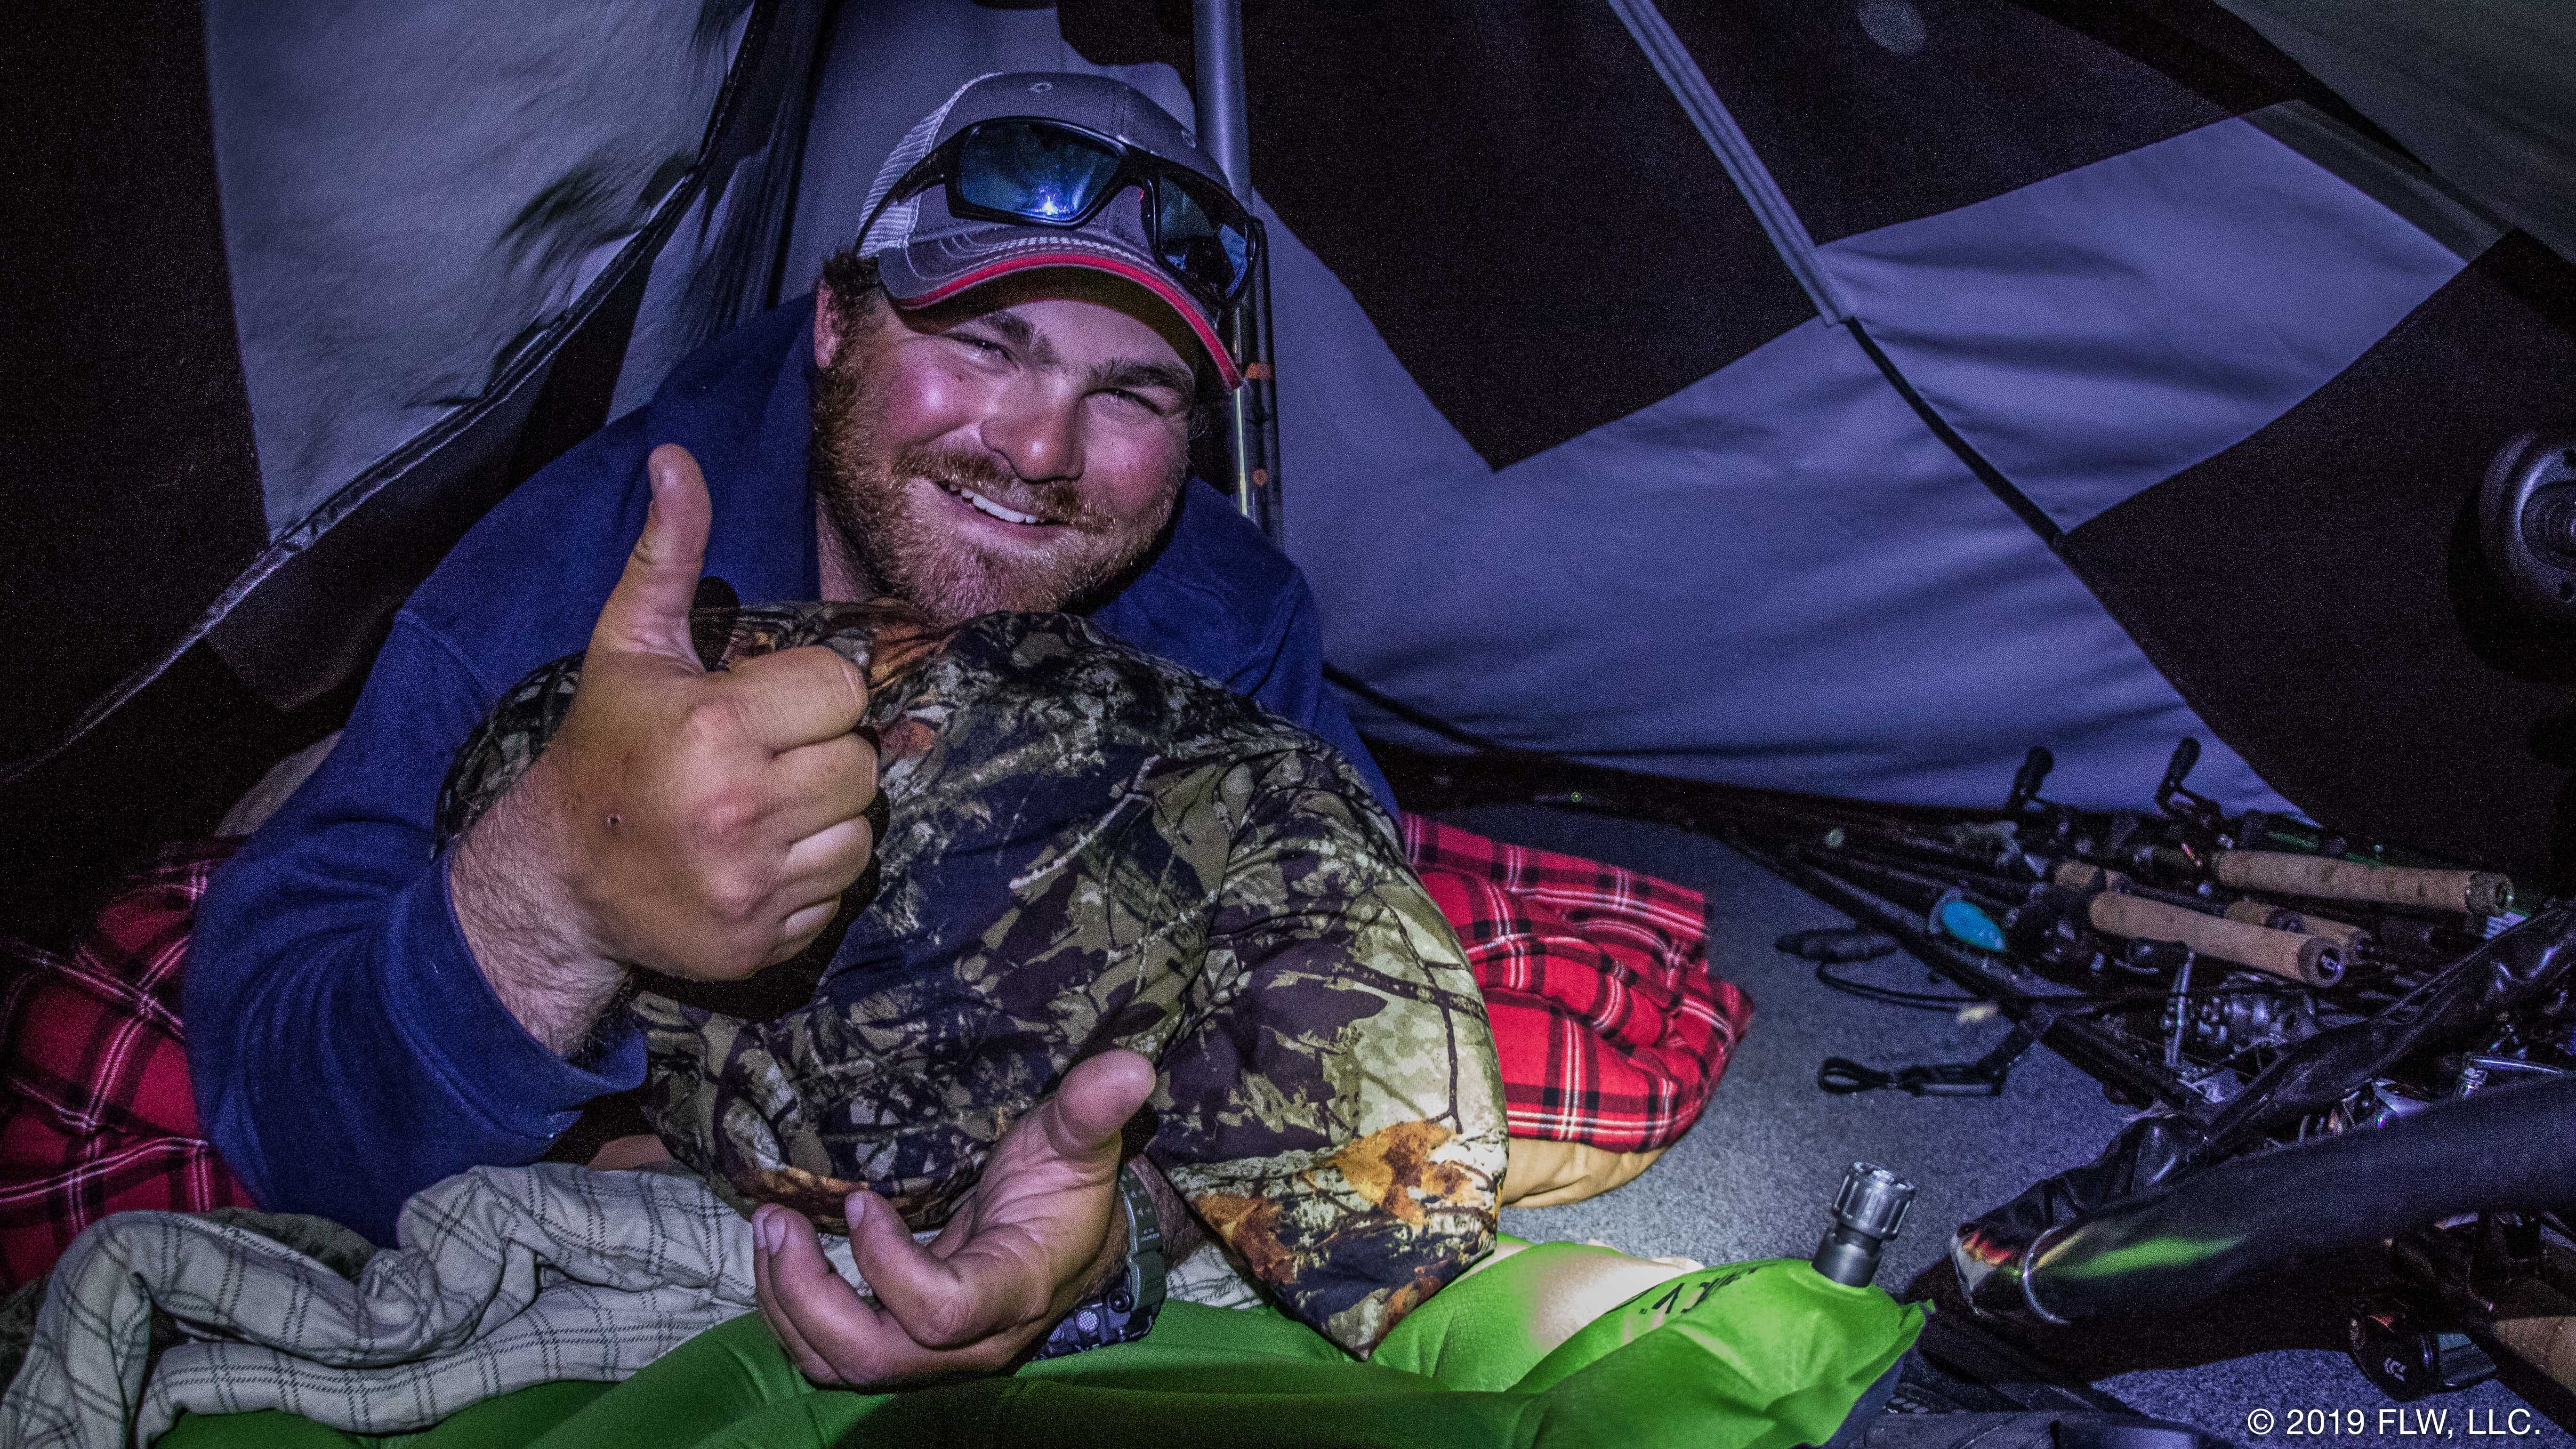 Fishing legend, Michigan native Kevin VanDam savoring the moment